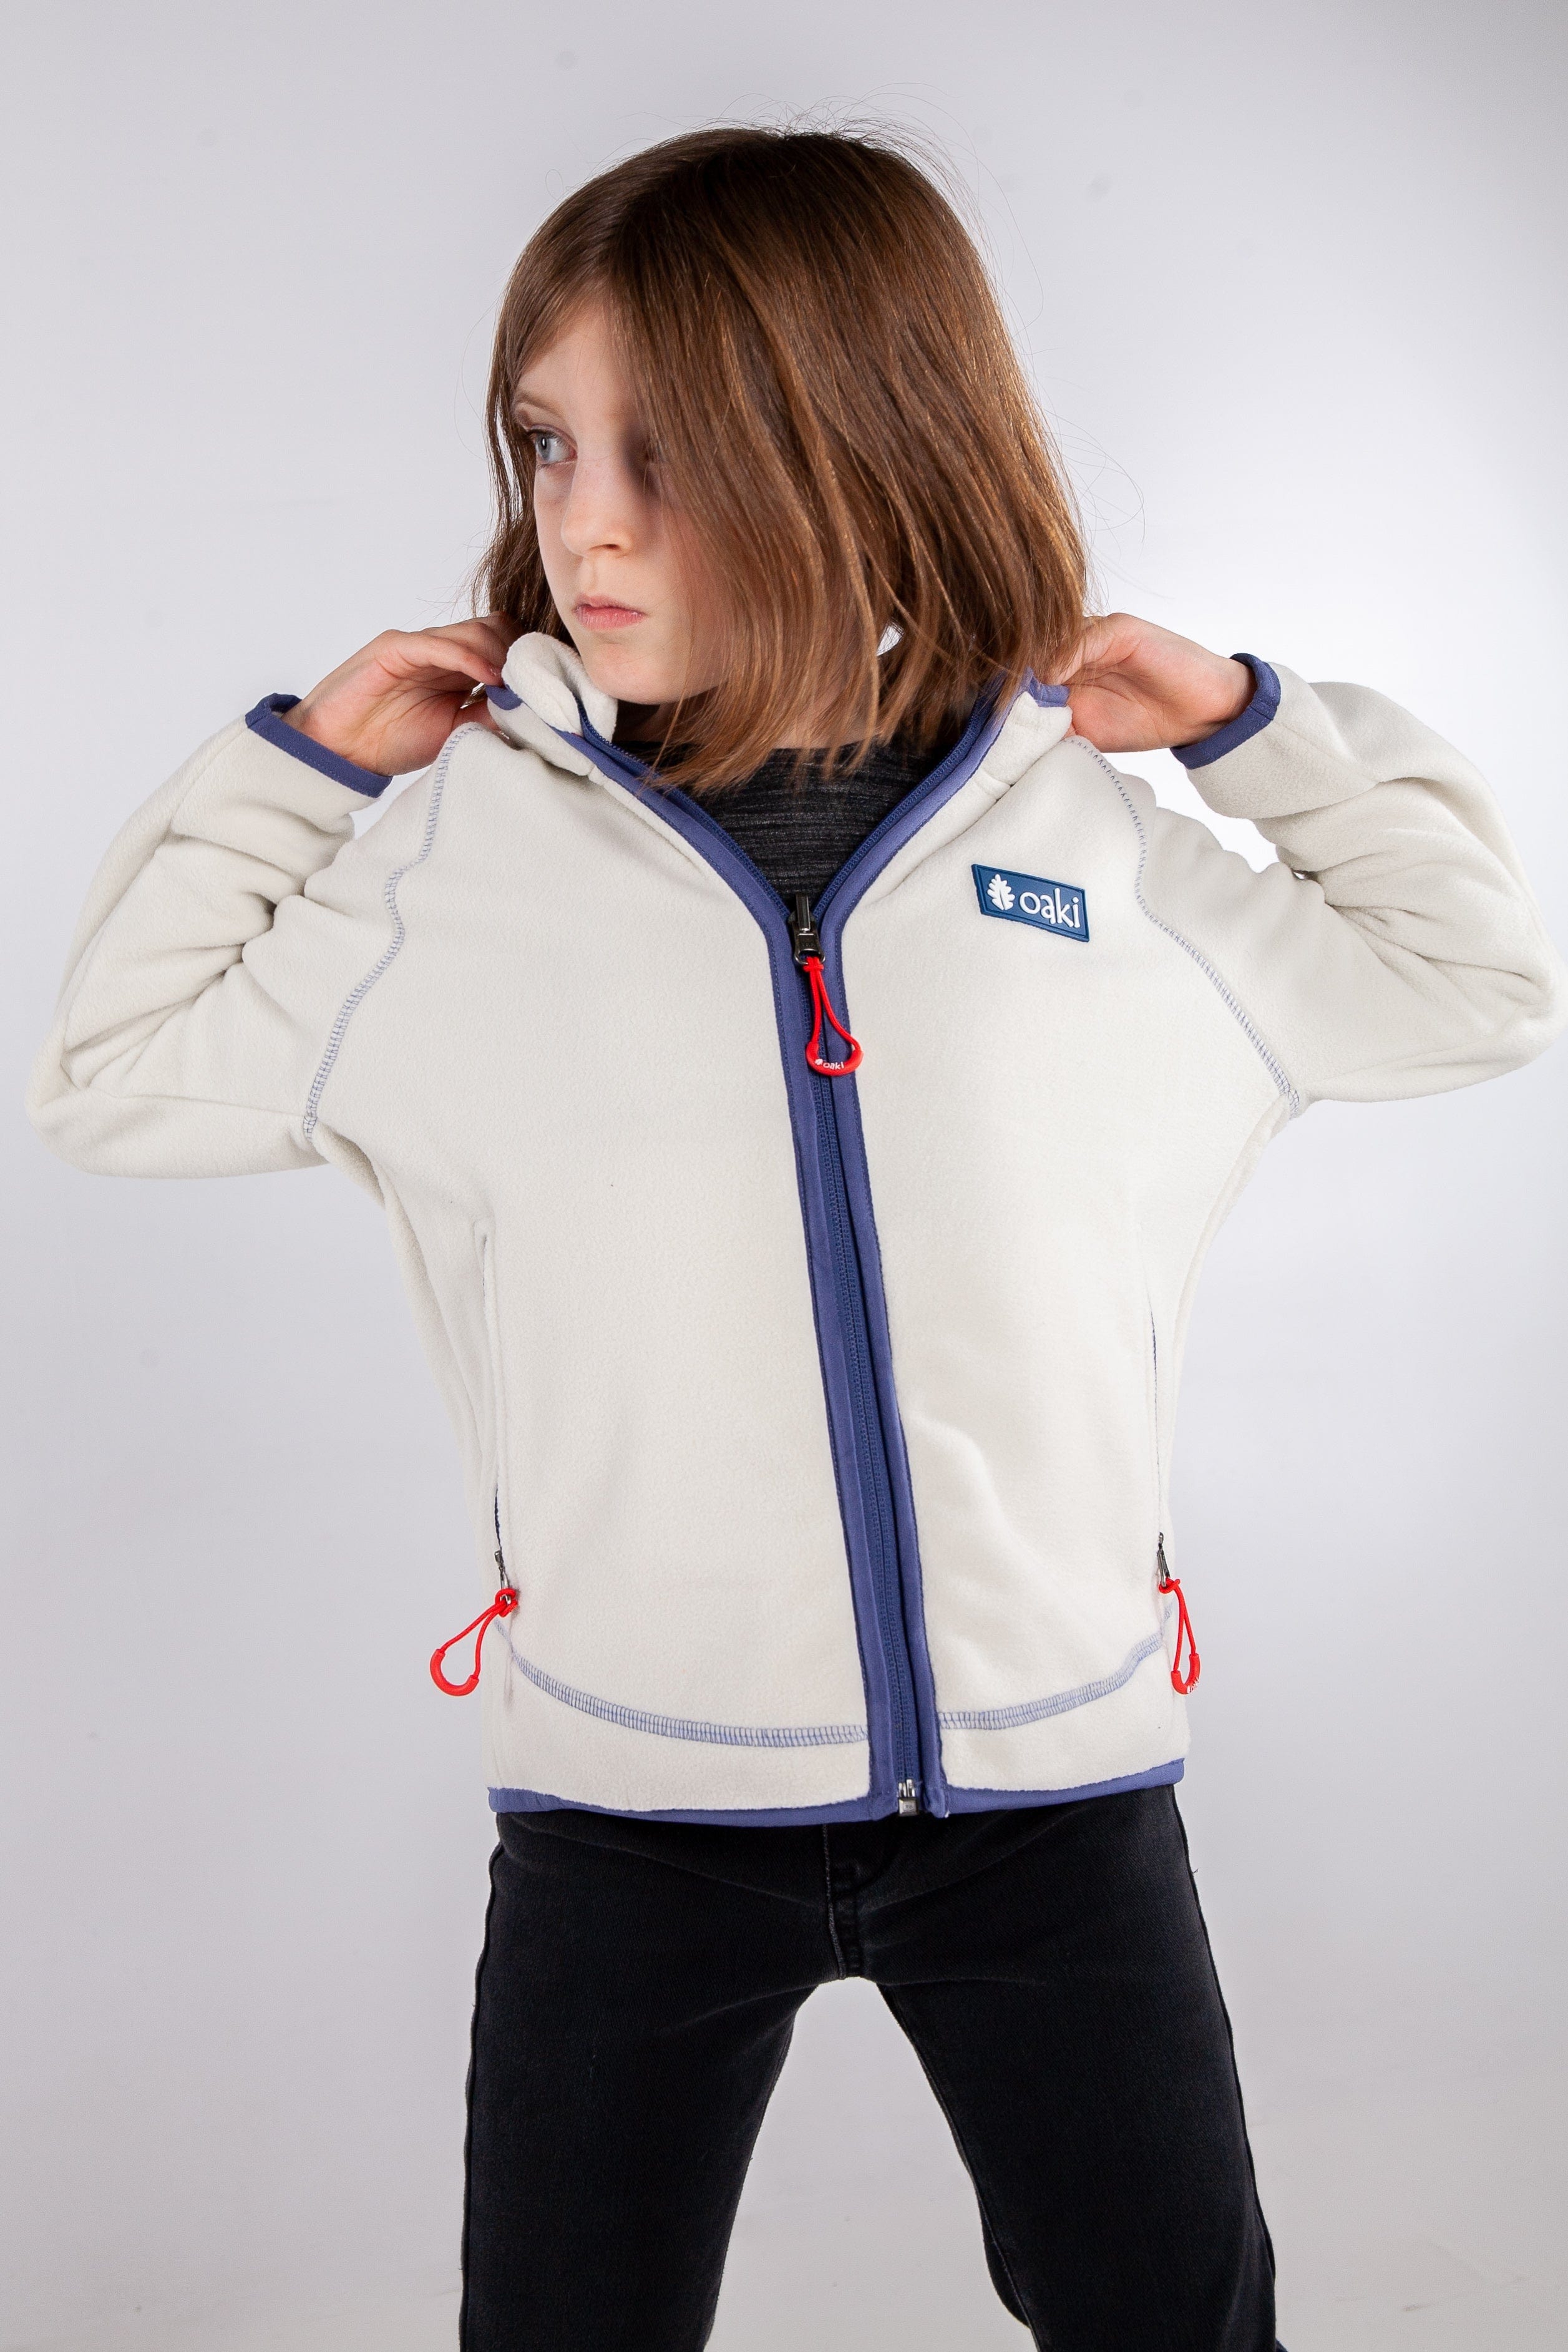 Polartec® 200 Series Fleece Jacket: Winter White – Biddle and Bop